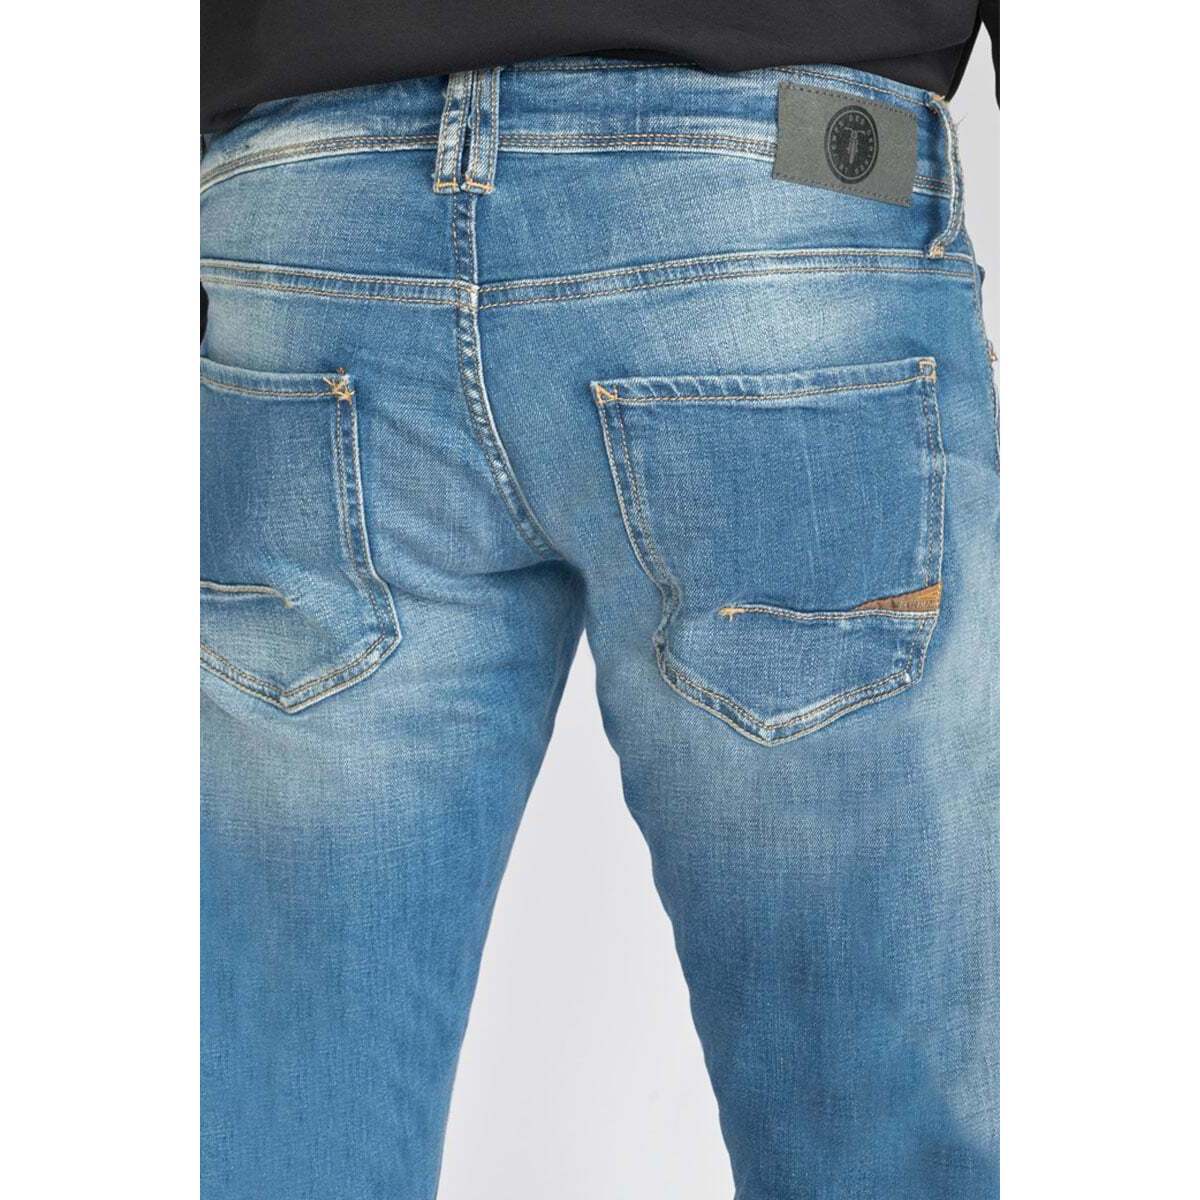 Le Temps des Cerises Bleu Basic 700/11 adjusted jeans vintage bleu bv27xrMJ